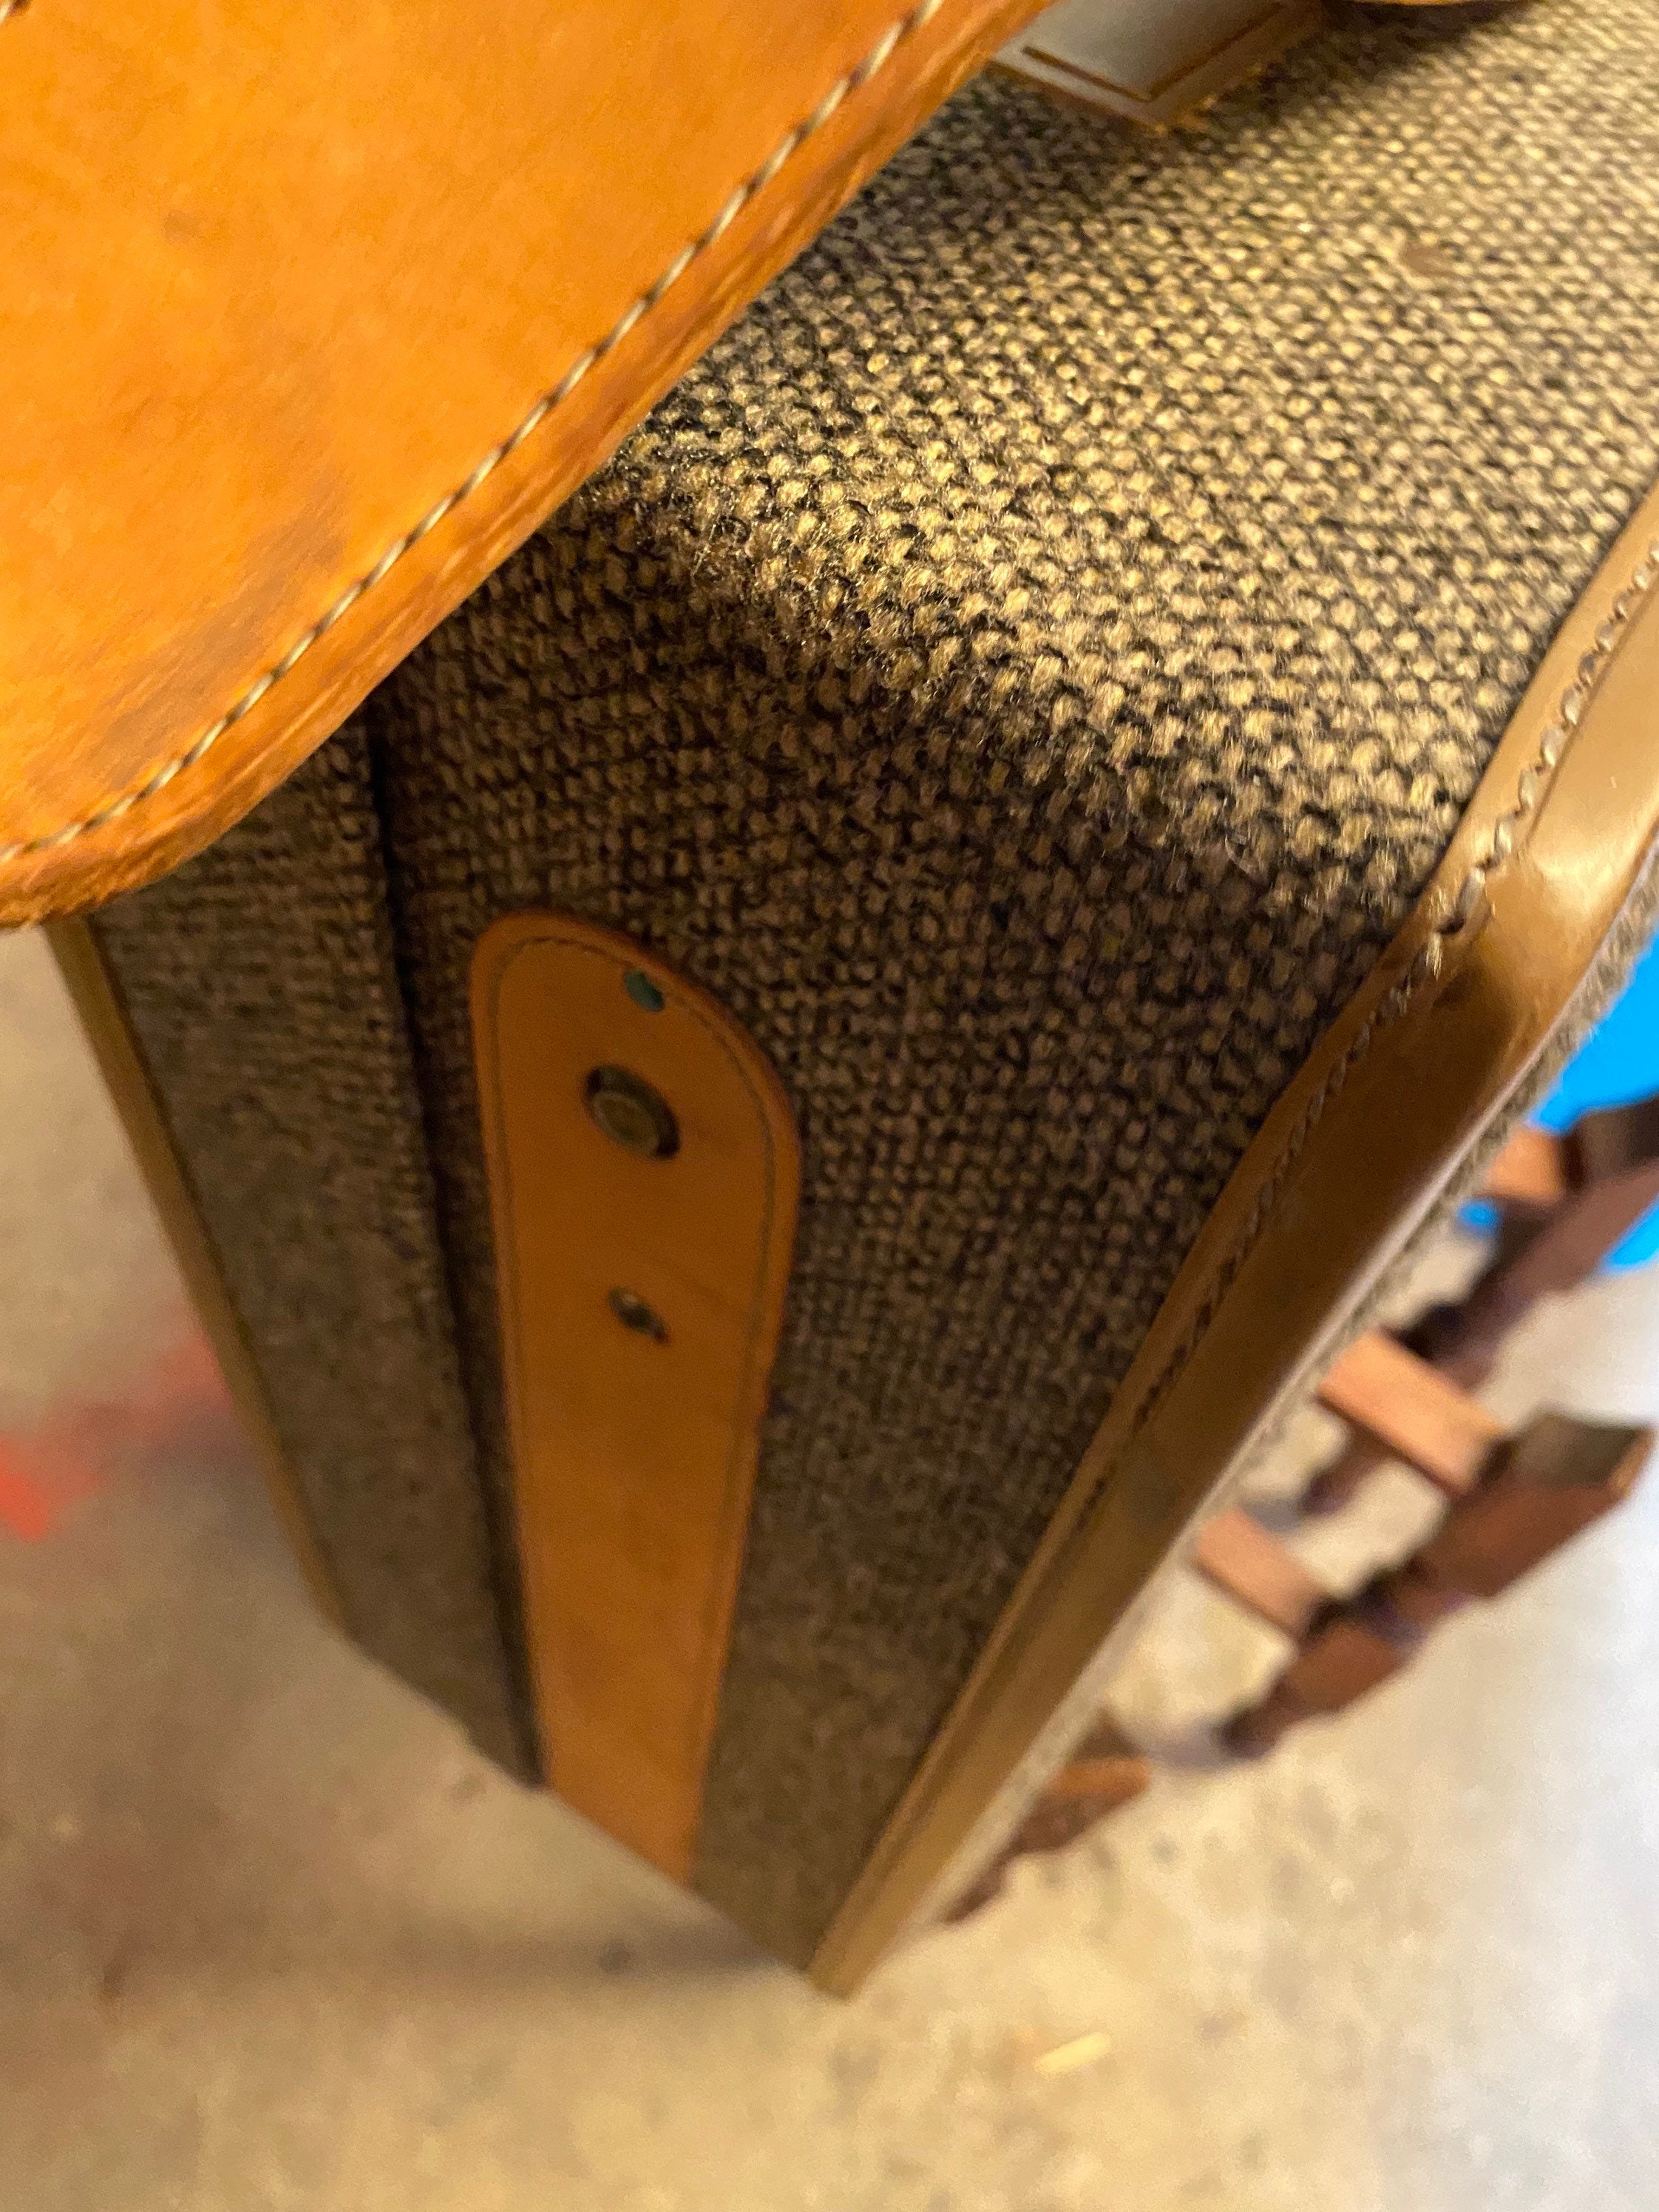 A Vintage Hartmann Luggage Suitcase